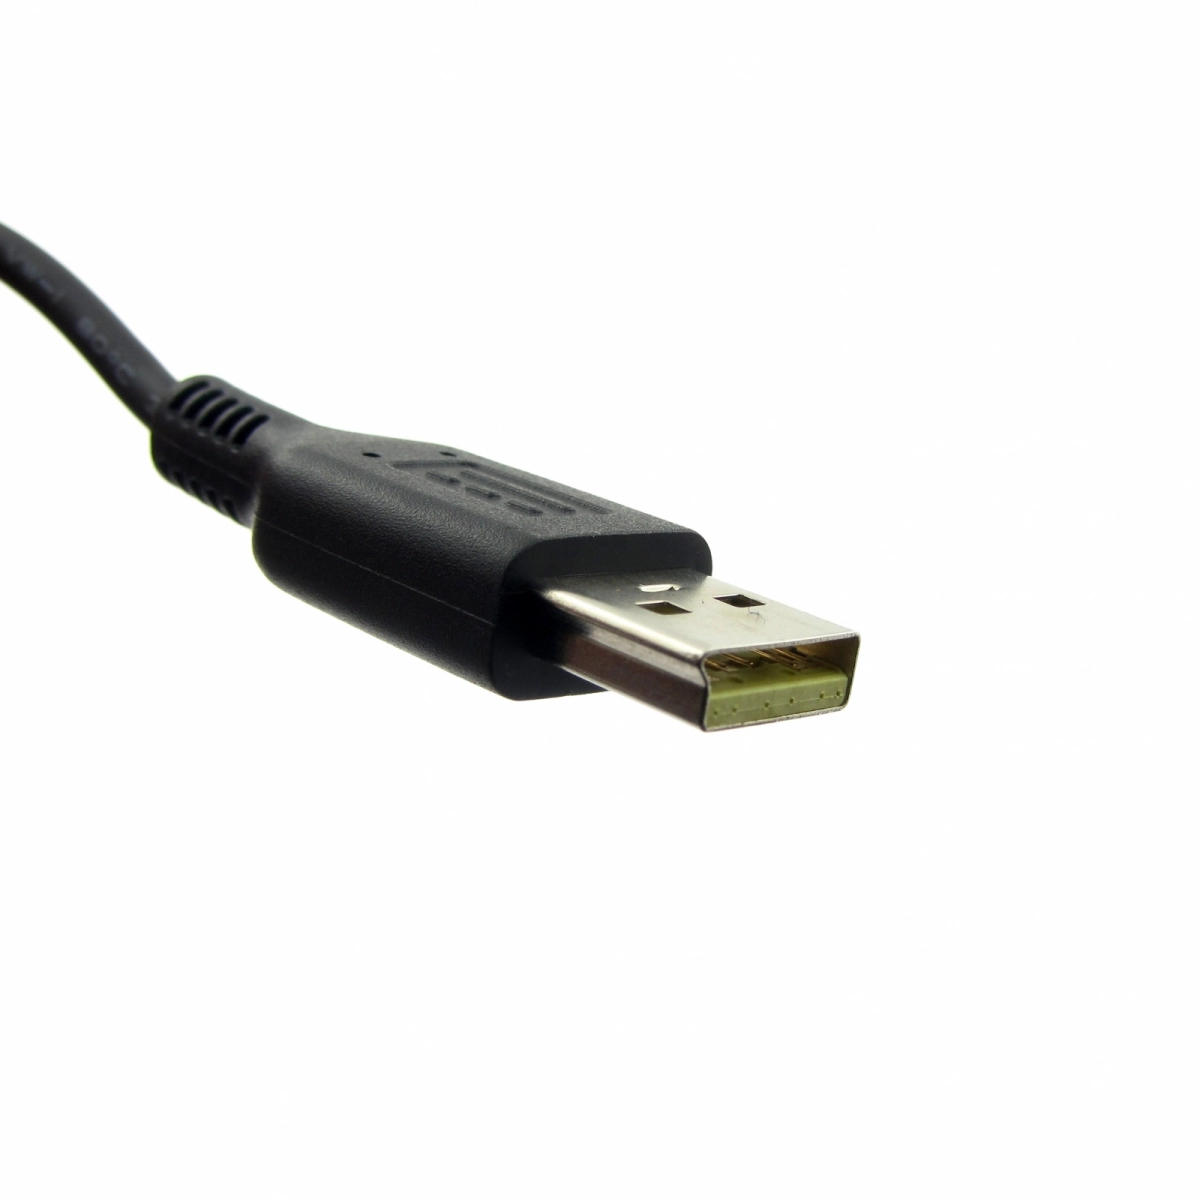 MTXtec Netzteil für LENOVO ADL40WLD, 20/5.2V, 2A, Stecker USB